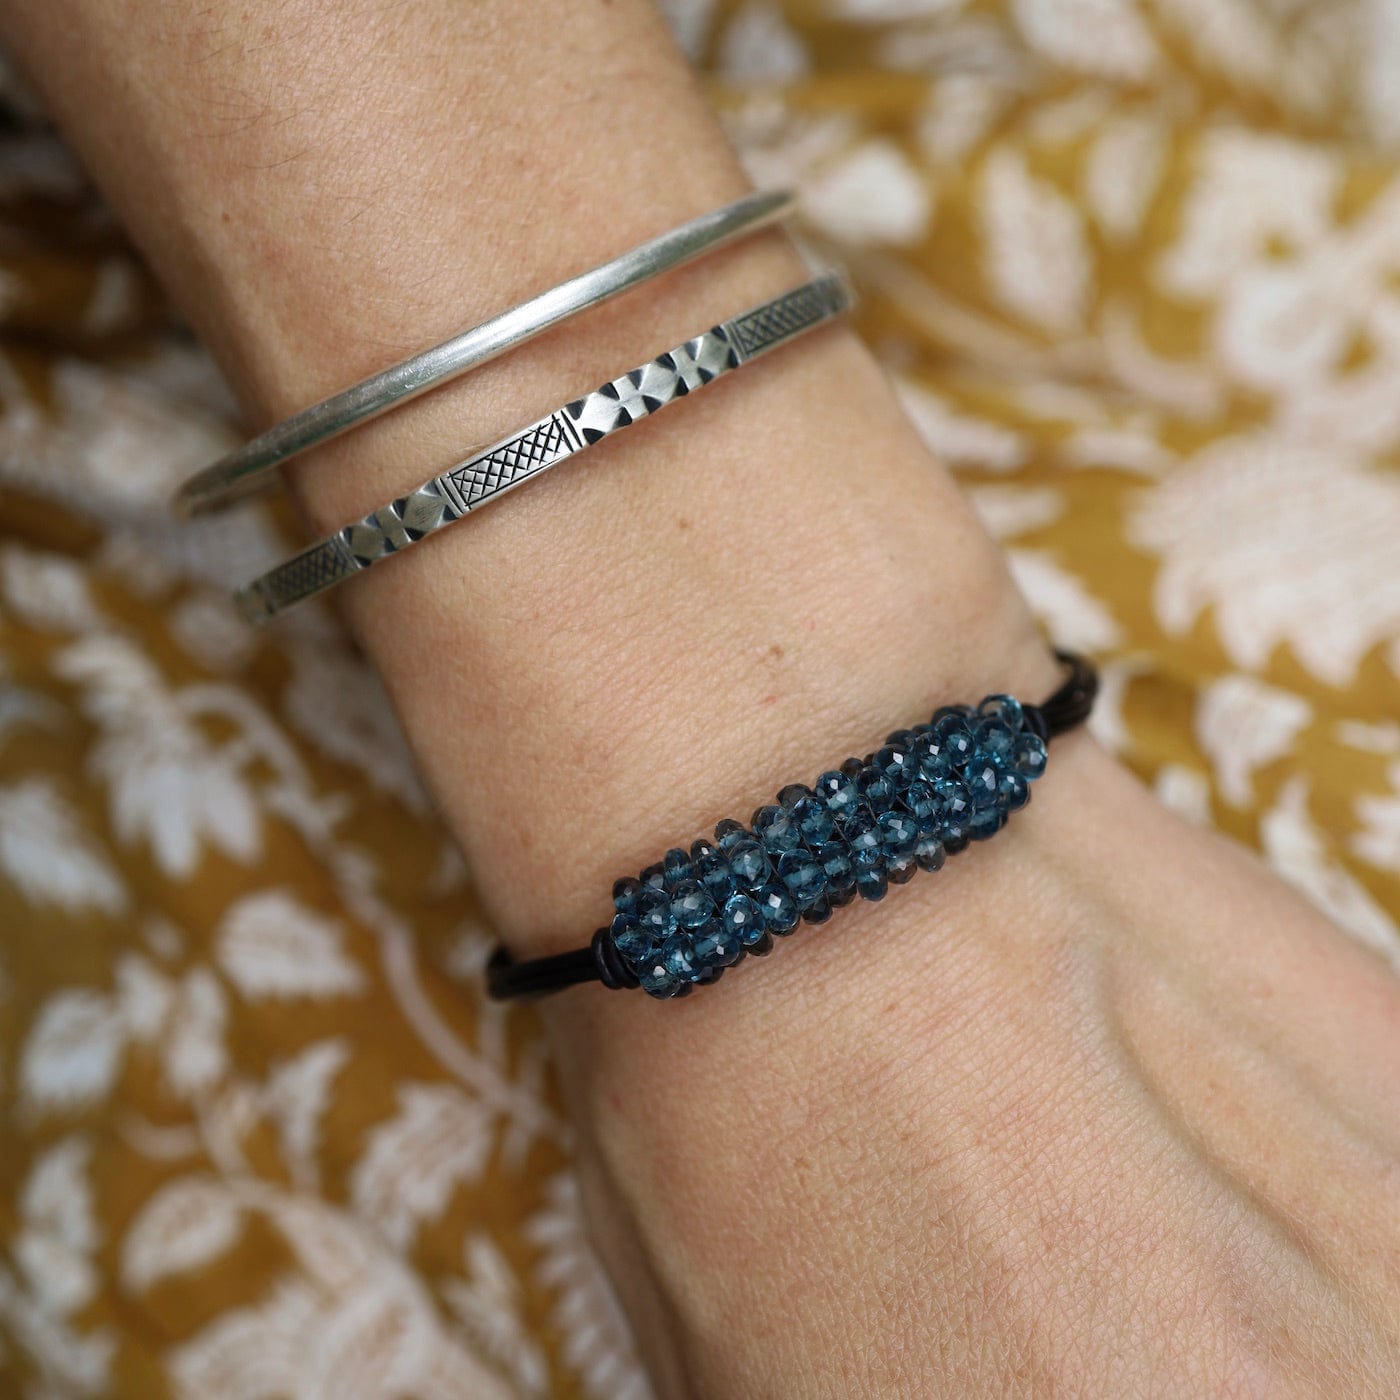 BRC-JM Hand Stitched London Blue Topaz Black Leather Bracelet